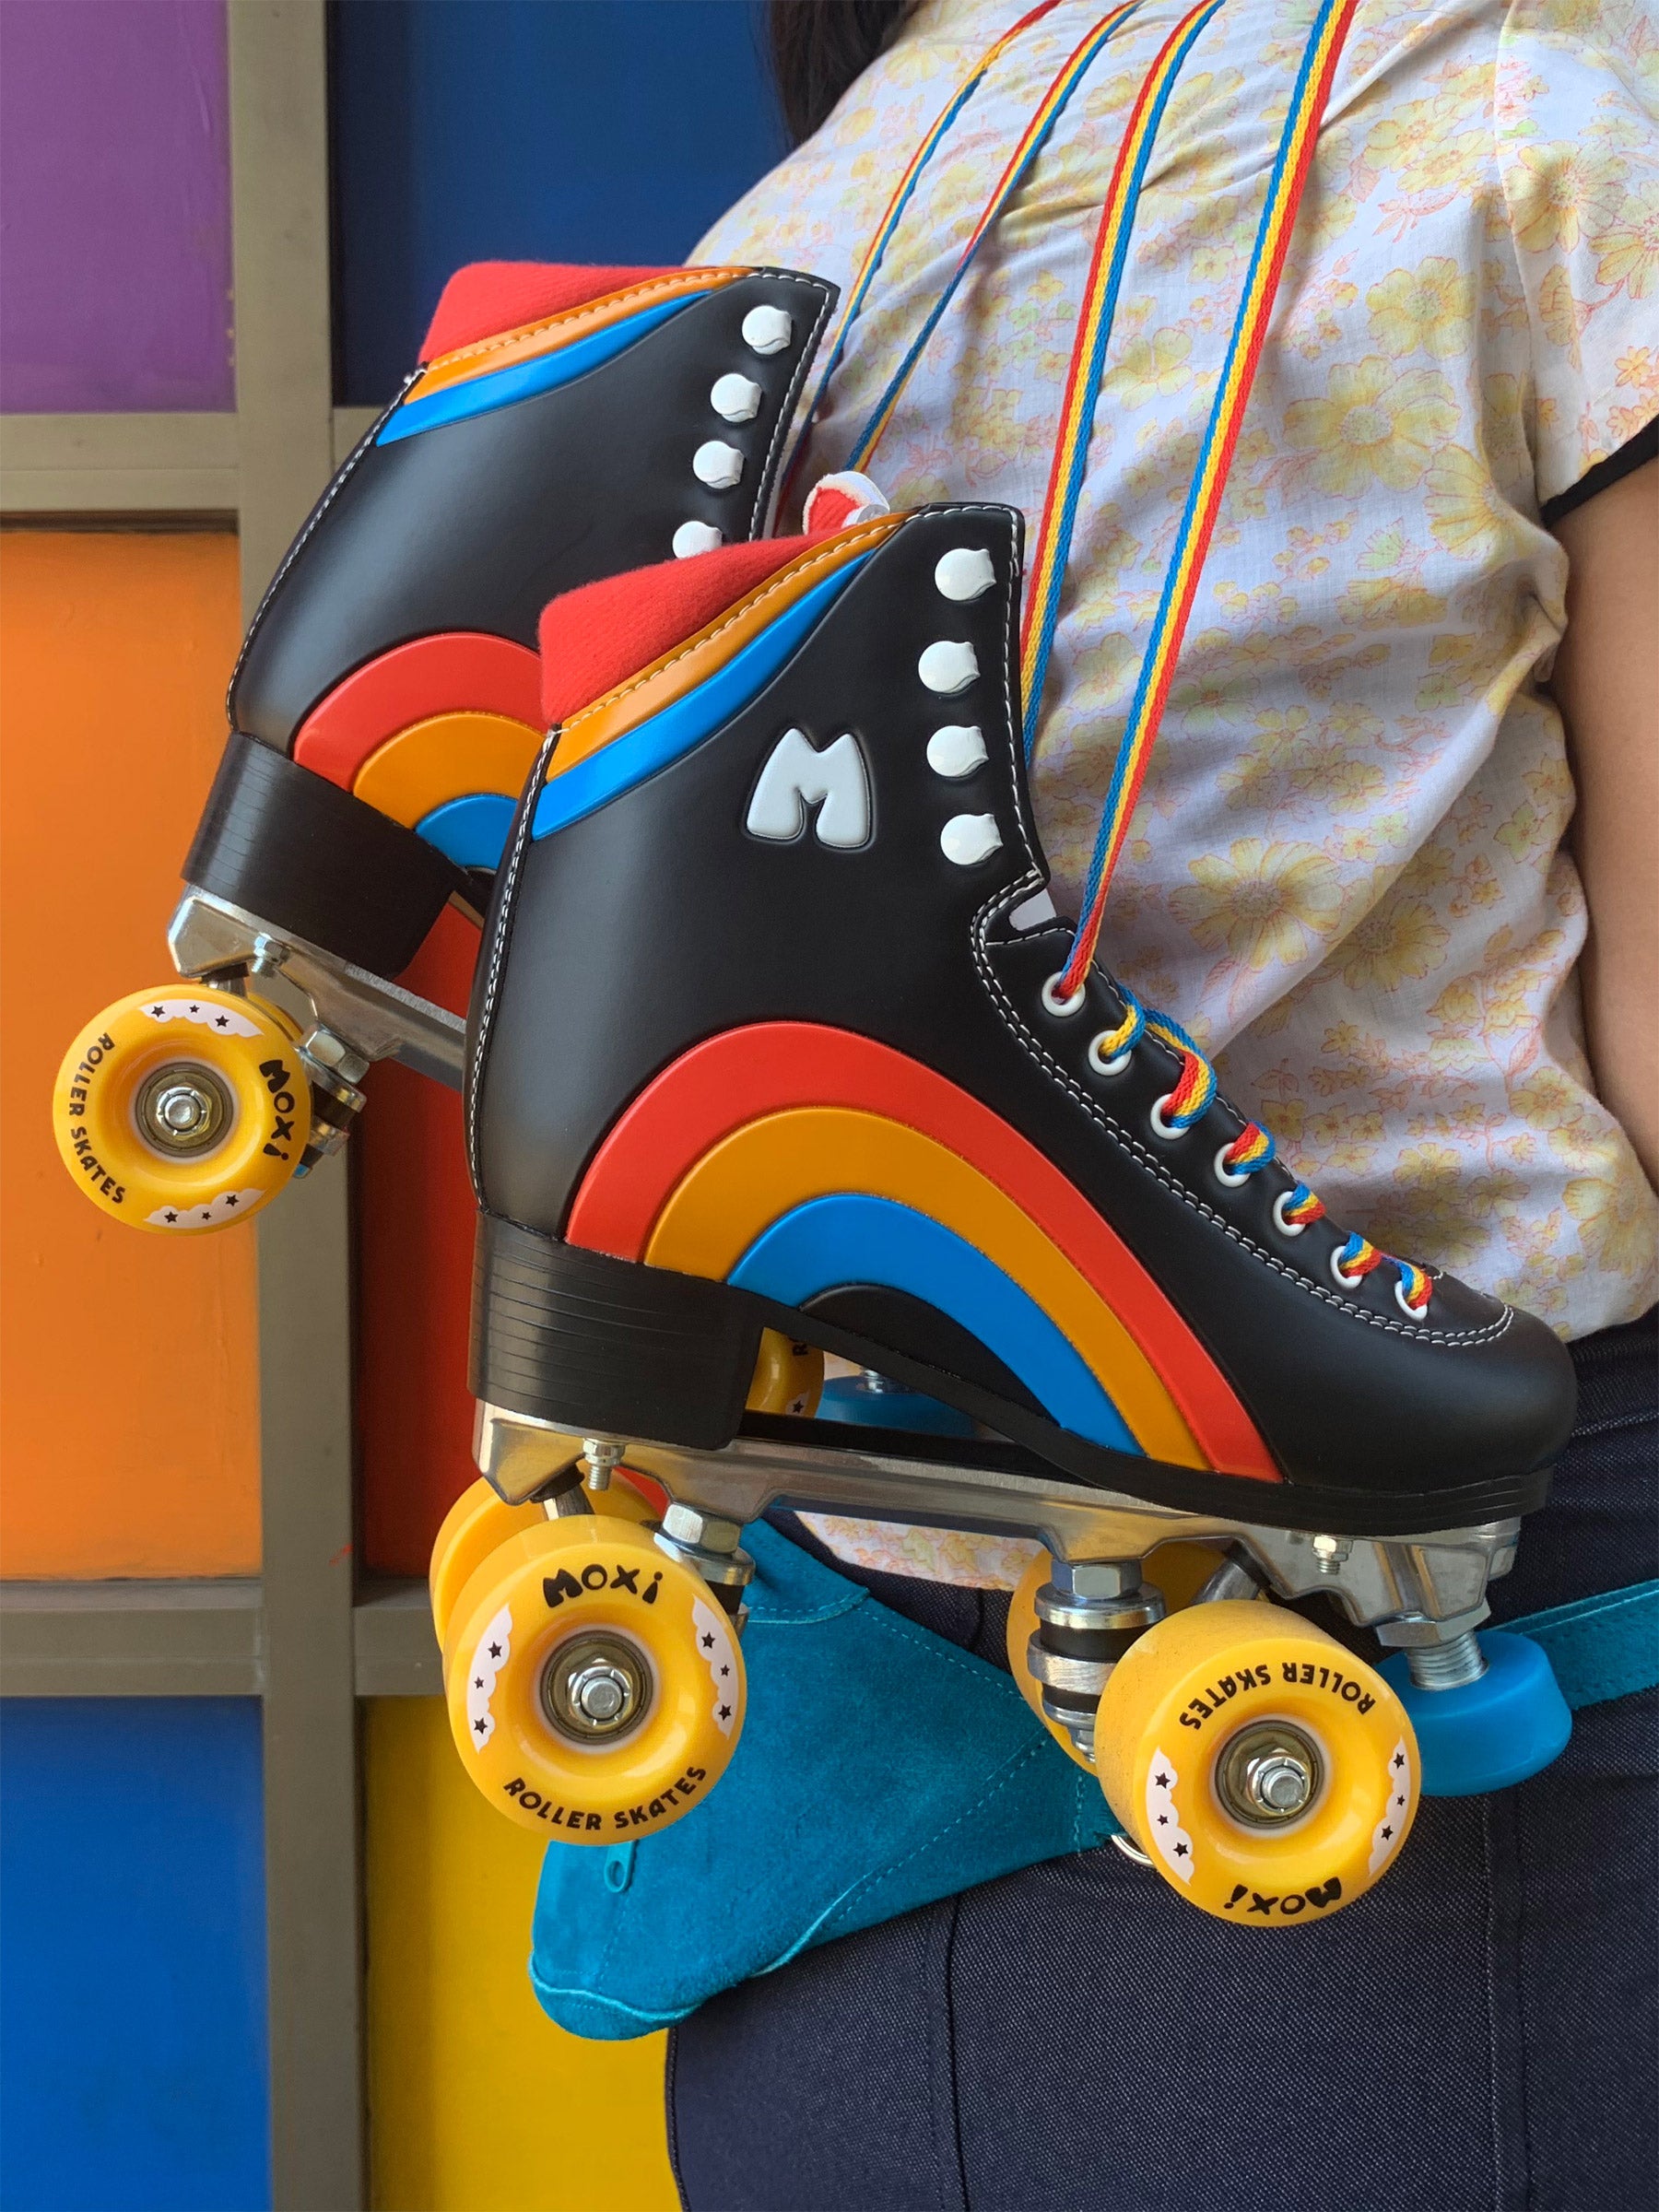 Moxi Rainbow Rider Roller Skates Asphalt Black Size 7 Fast Shipping w8-8.5